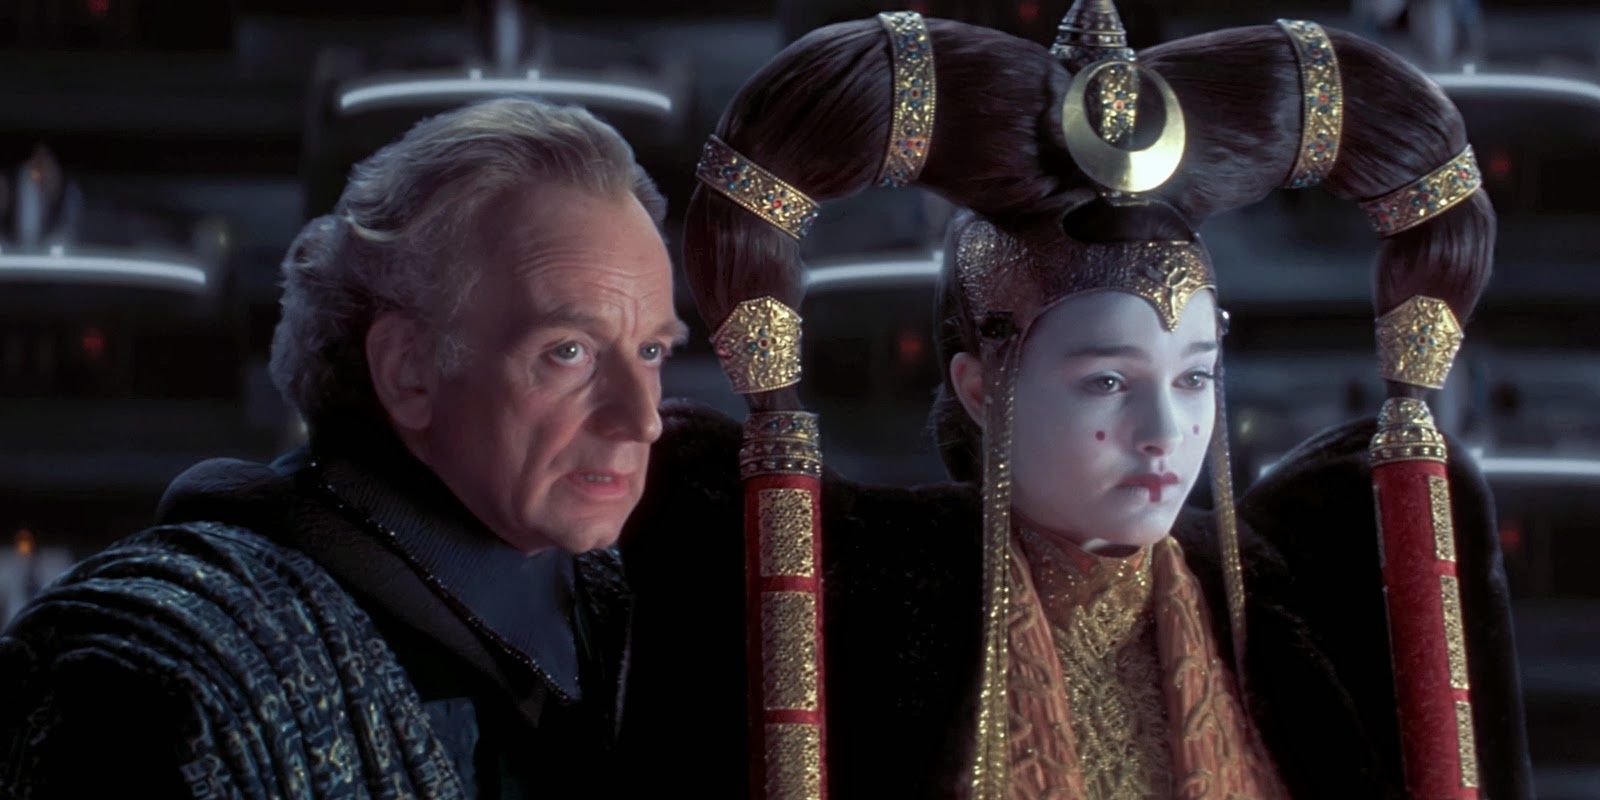 Queen Amidala and Senator Palpatine sit in a Senate hearing in The Phantom Menace